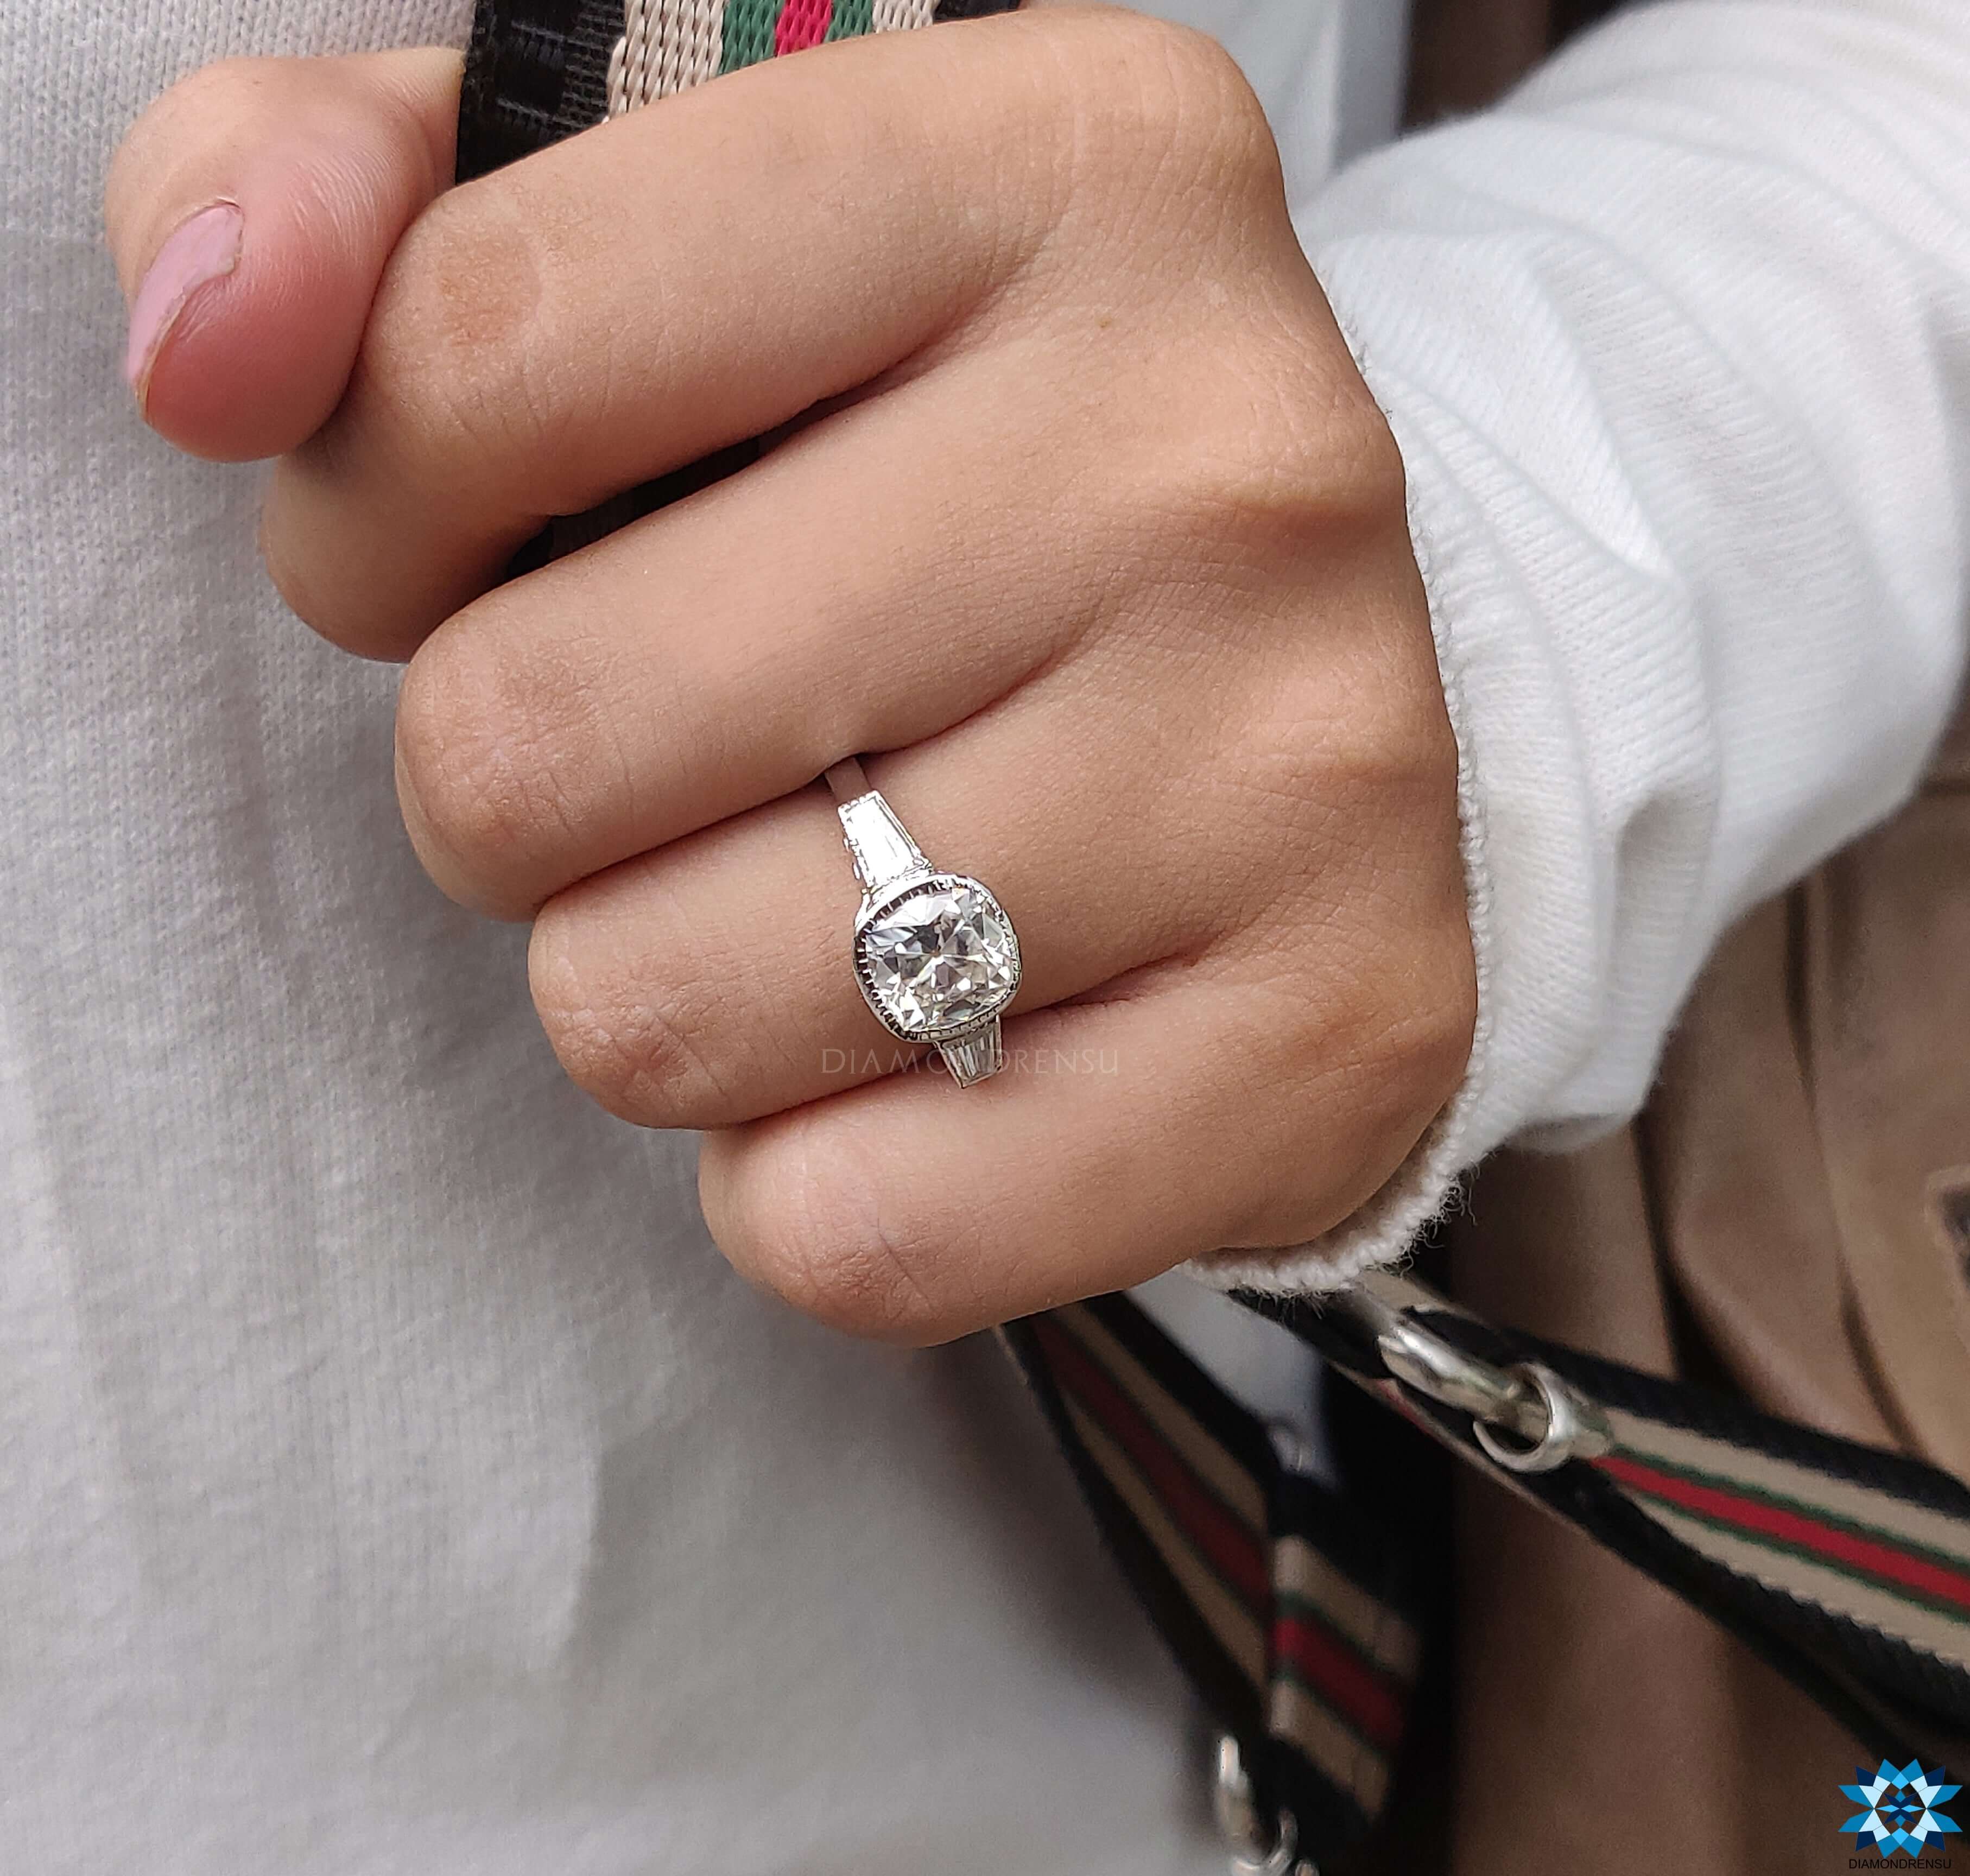 diamondrensu, customzied ring